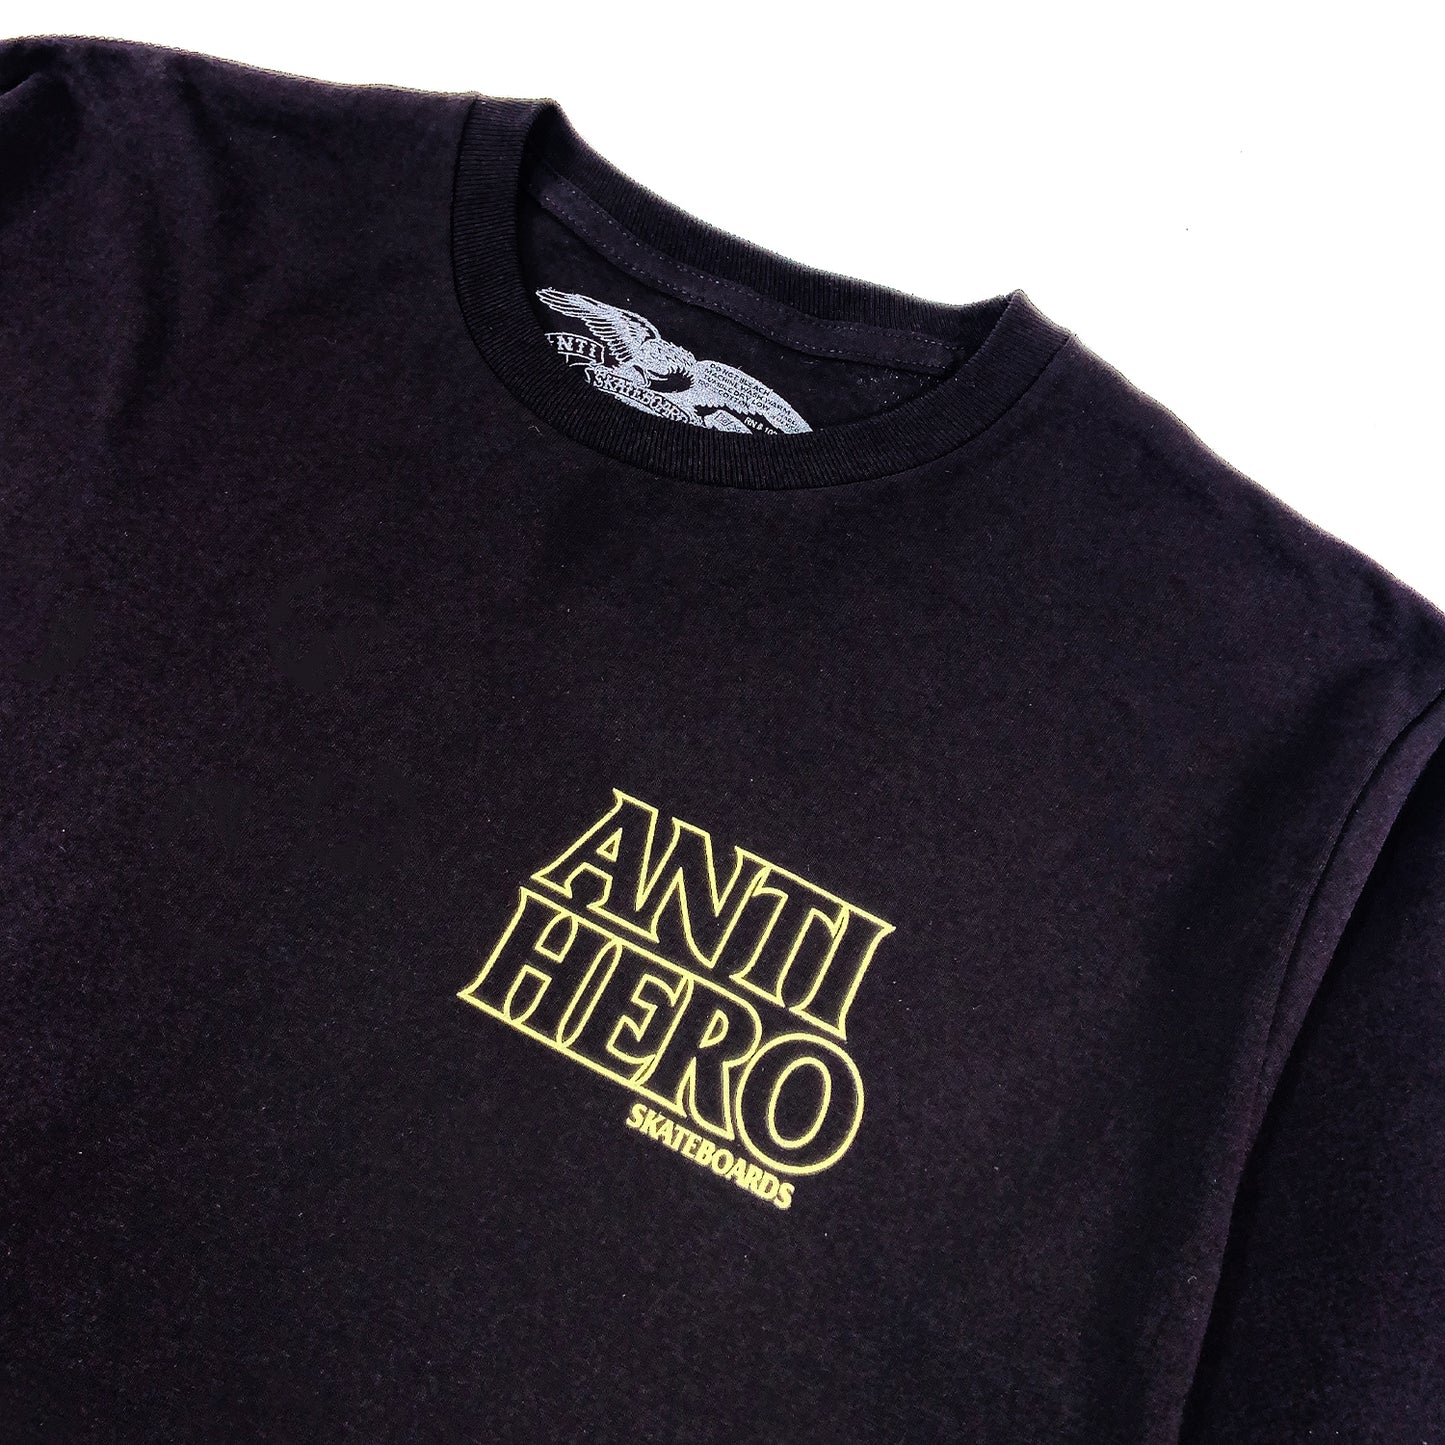 Anti Hero - Outline Hero - T-shirt - Black - Prime Delux Store